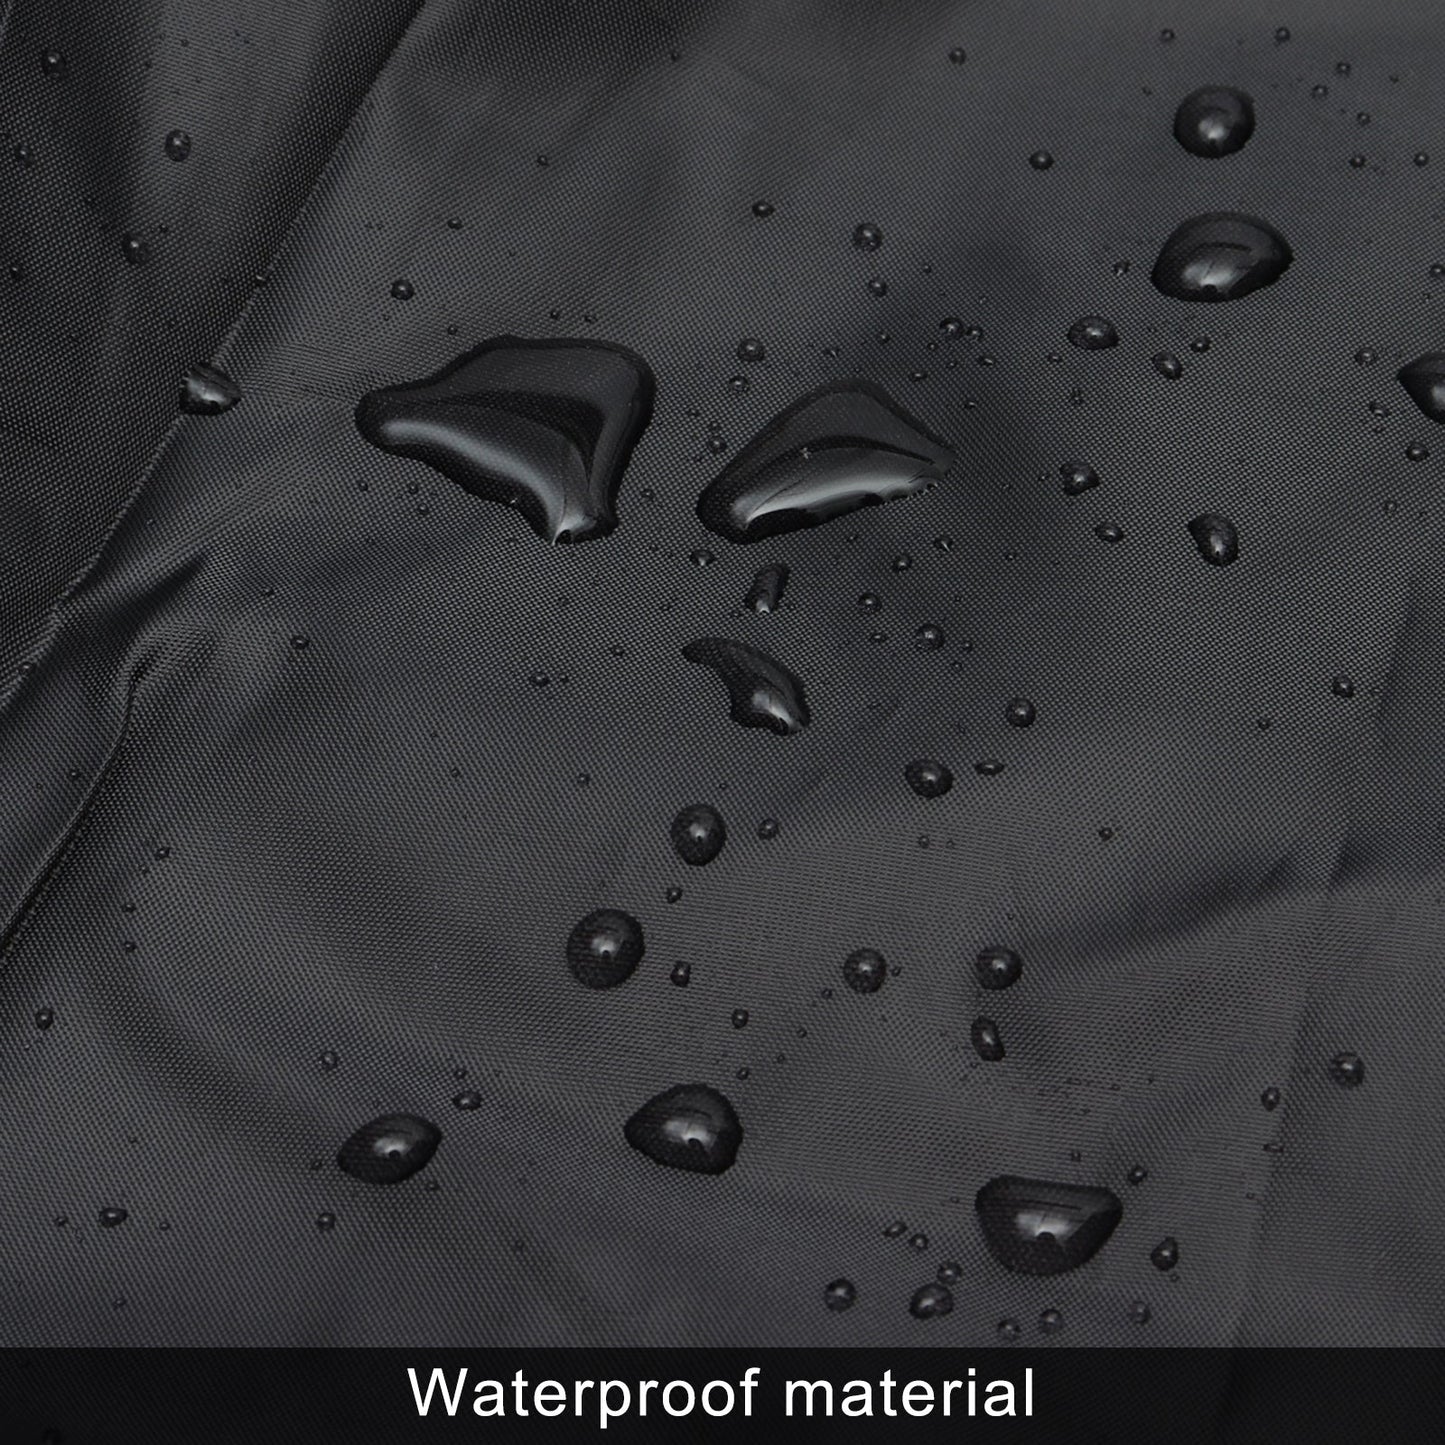 Waterproof ATV Cover XXXL